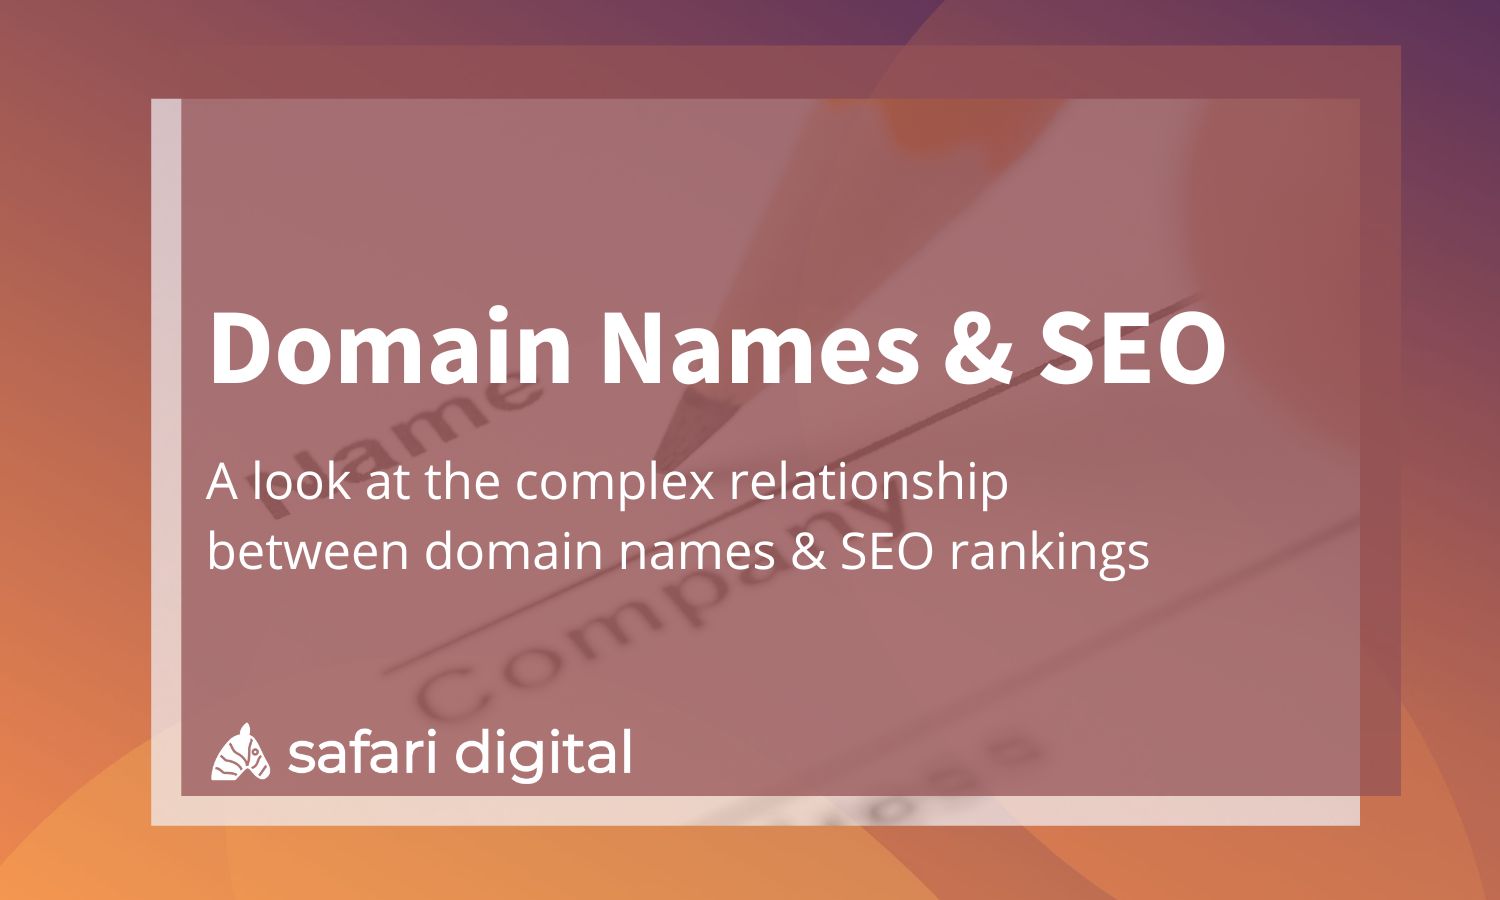 Domain Names & SEO Cover Image